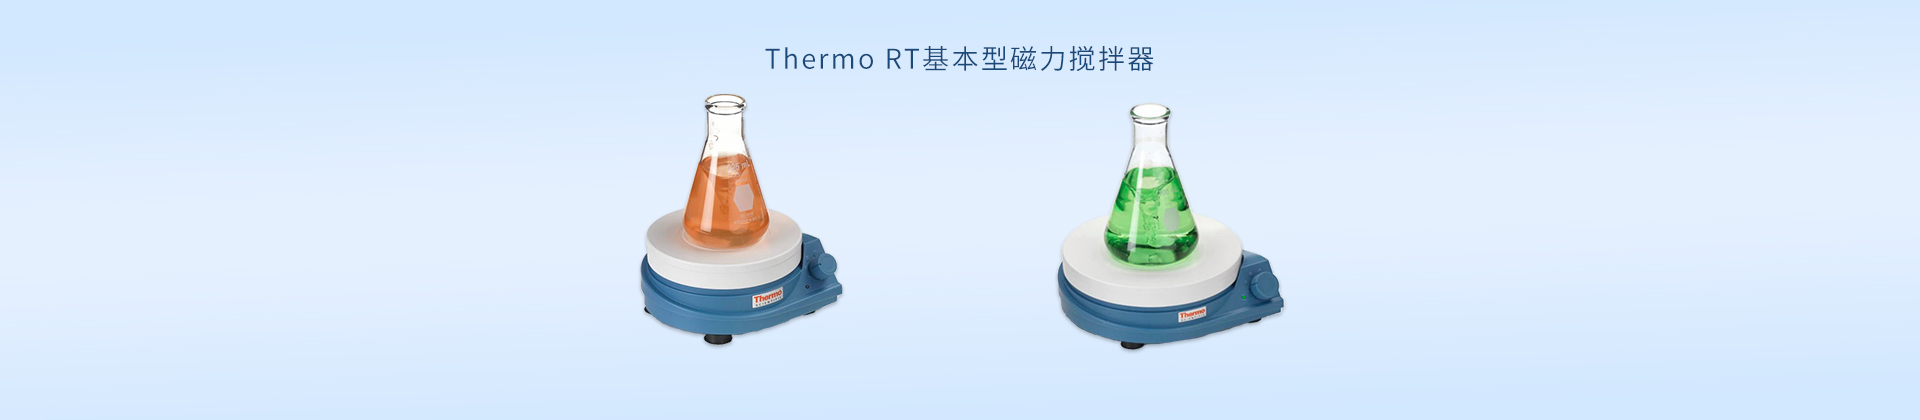 Thermo RT基本型磁力搅拌器